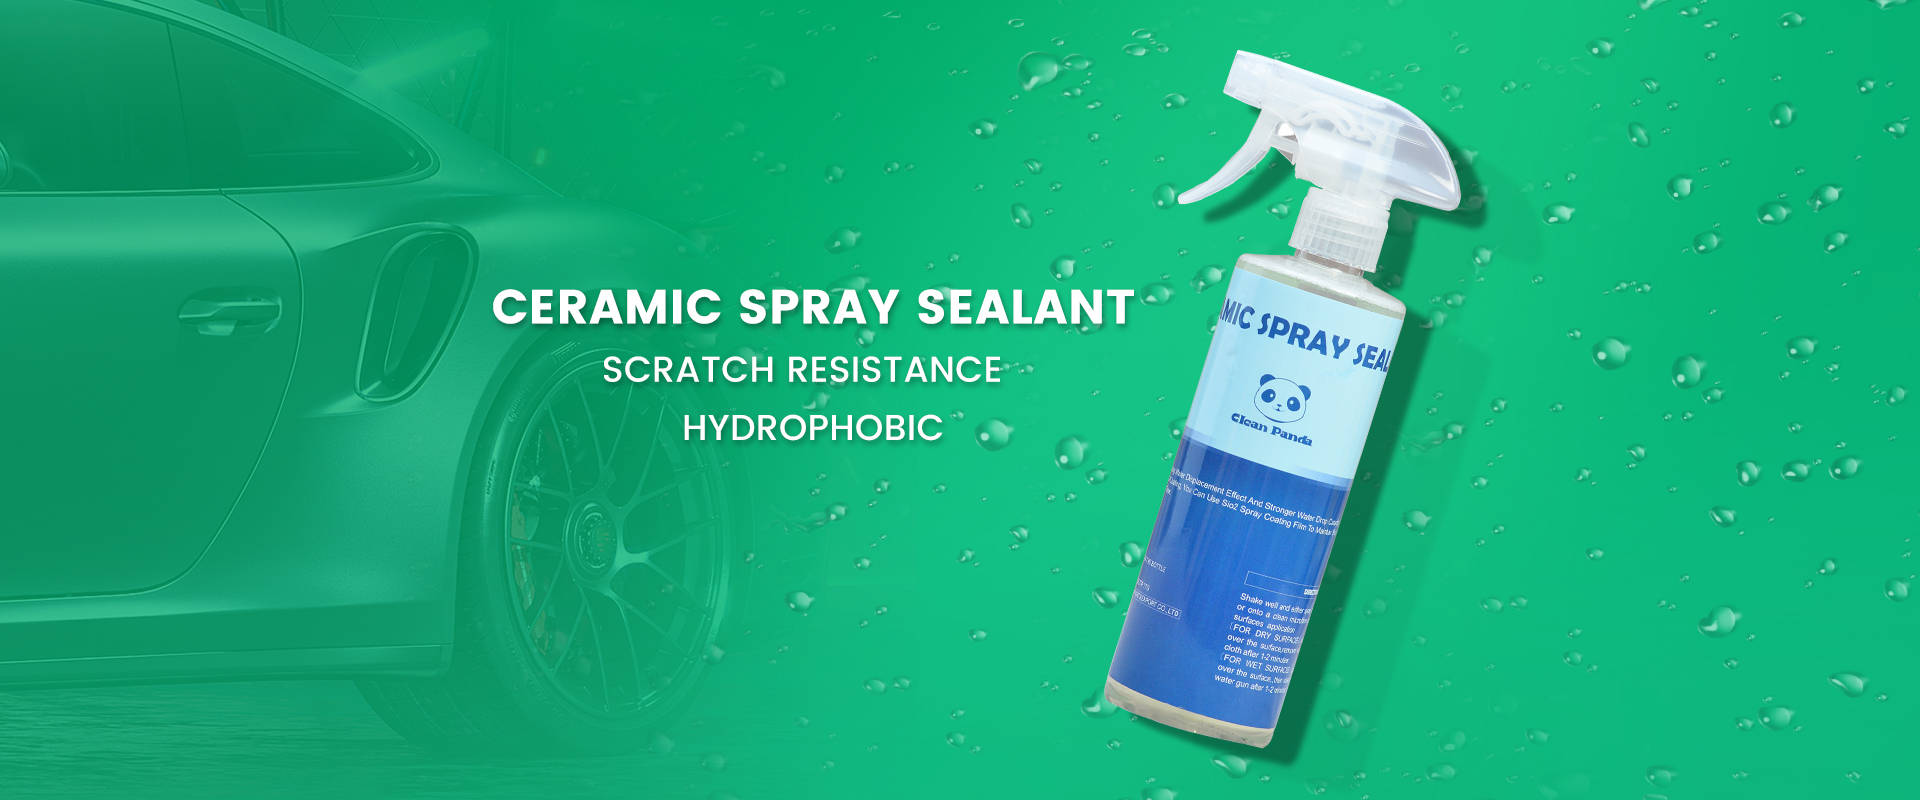 ceramic spray sealant banner